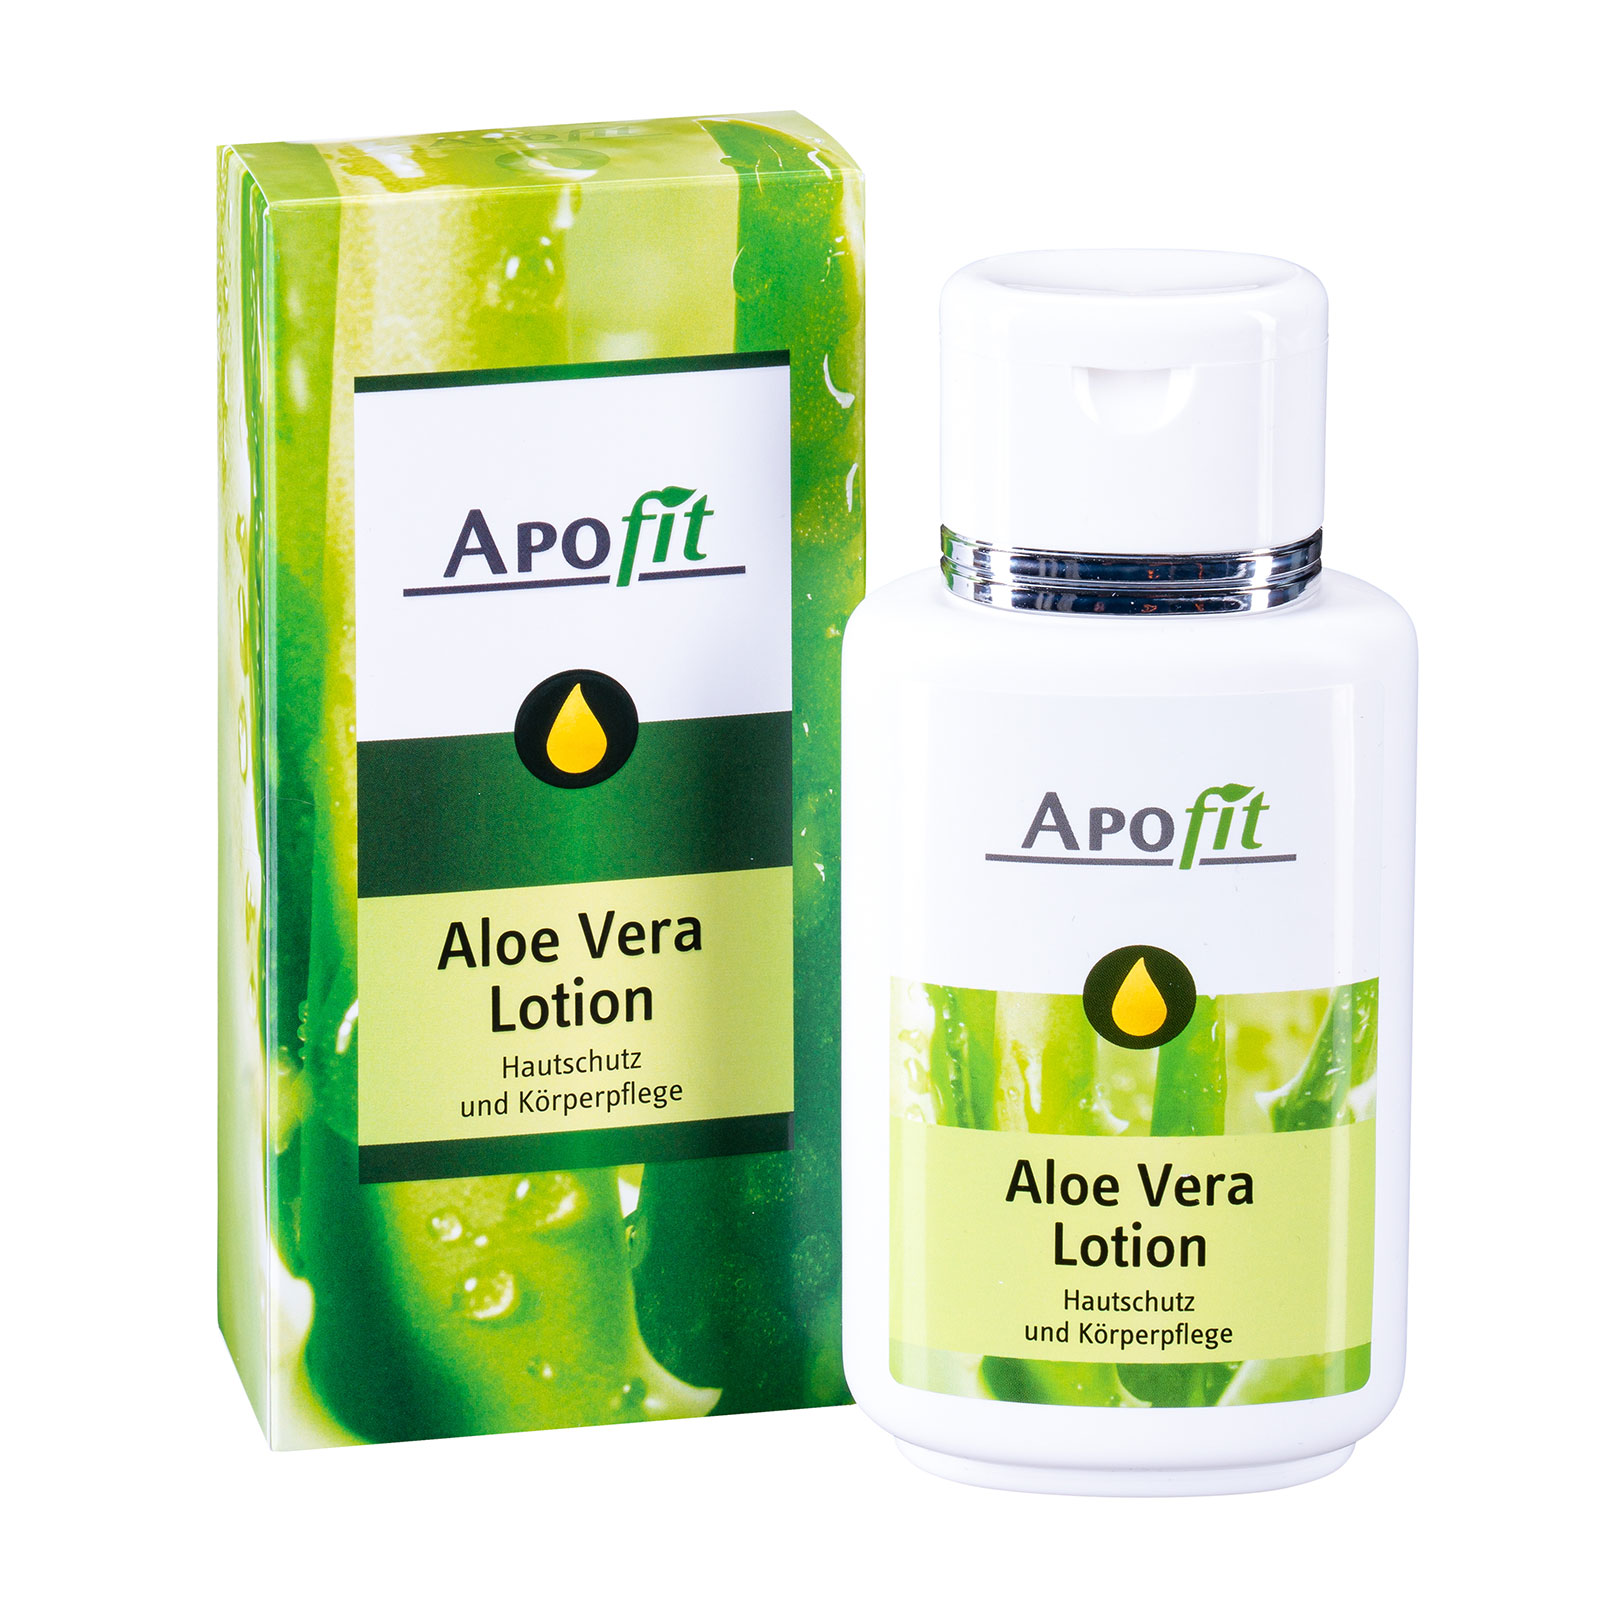 APOfit Aloe Vera Lotion 200ml